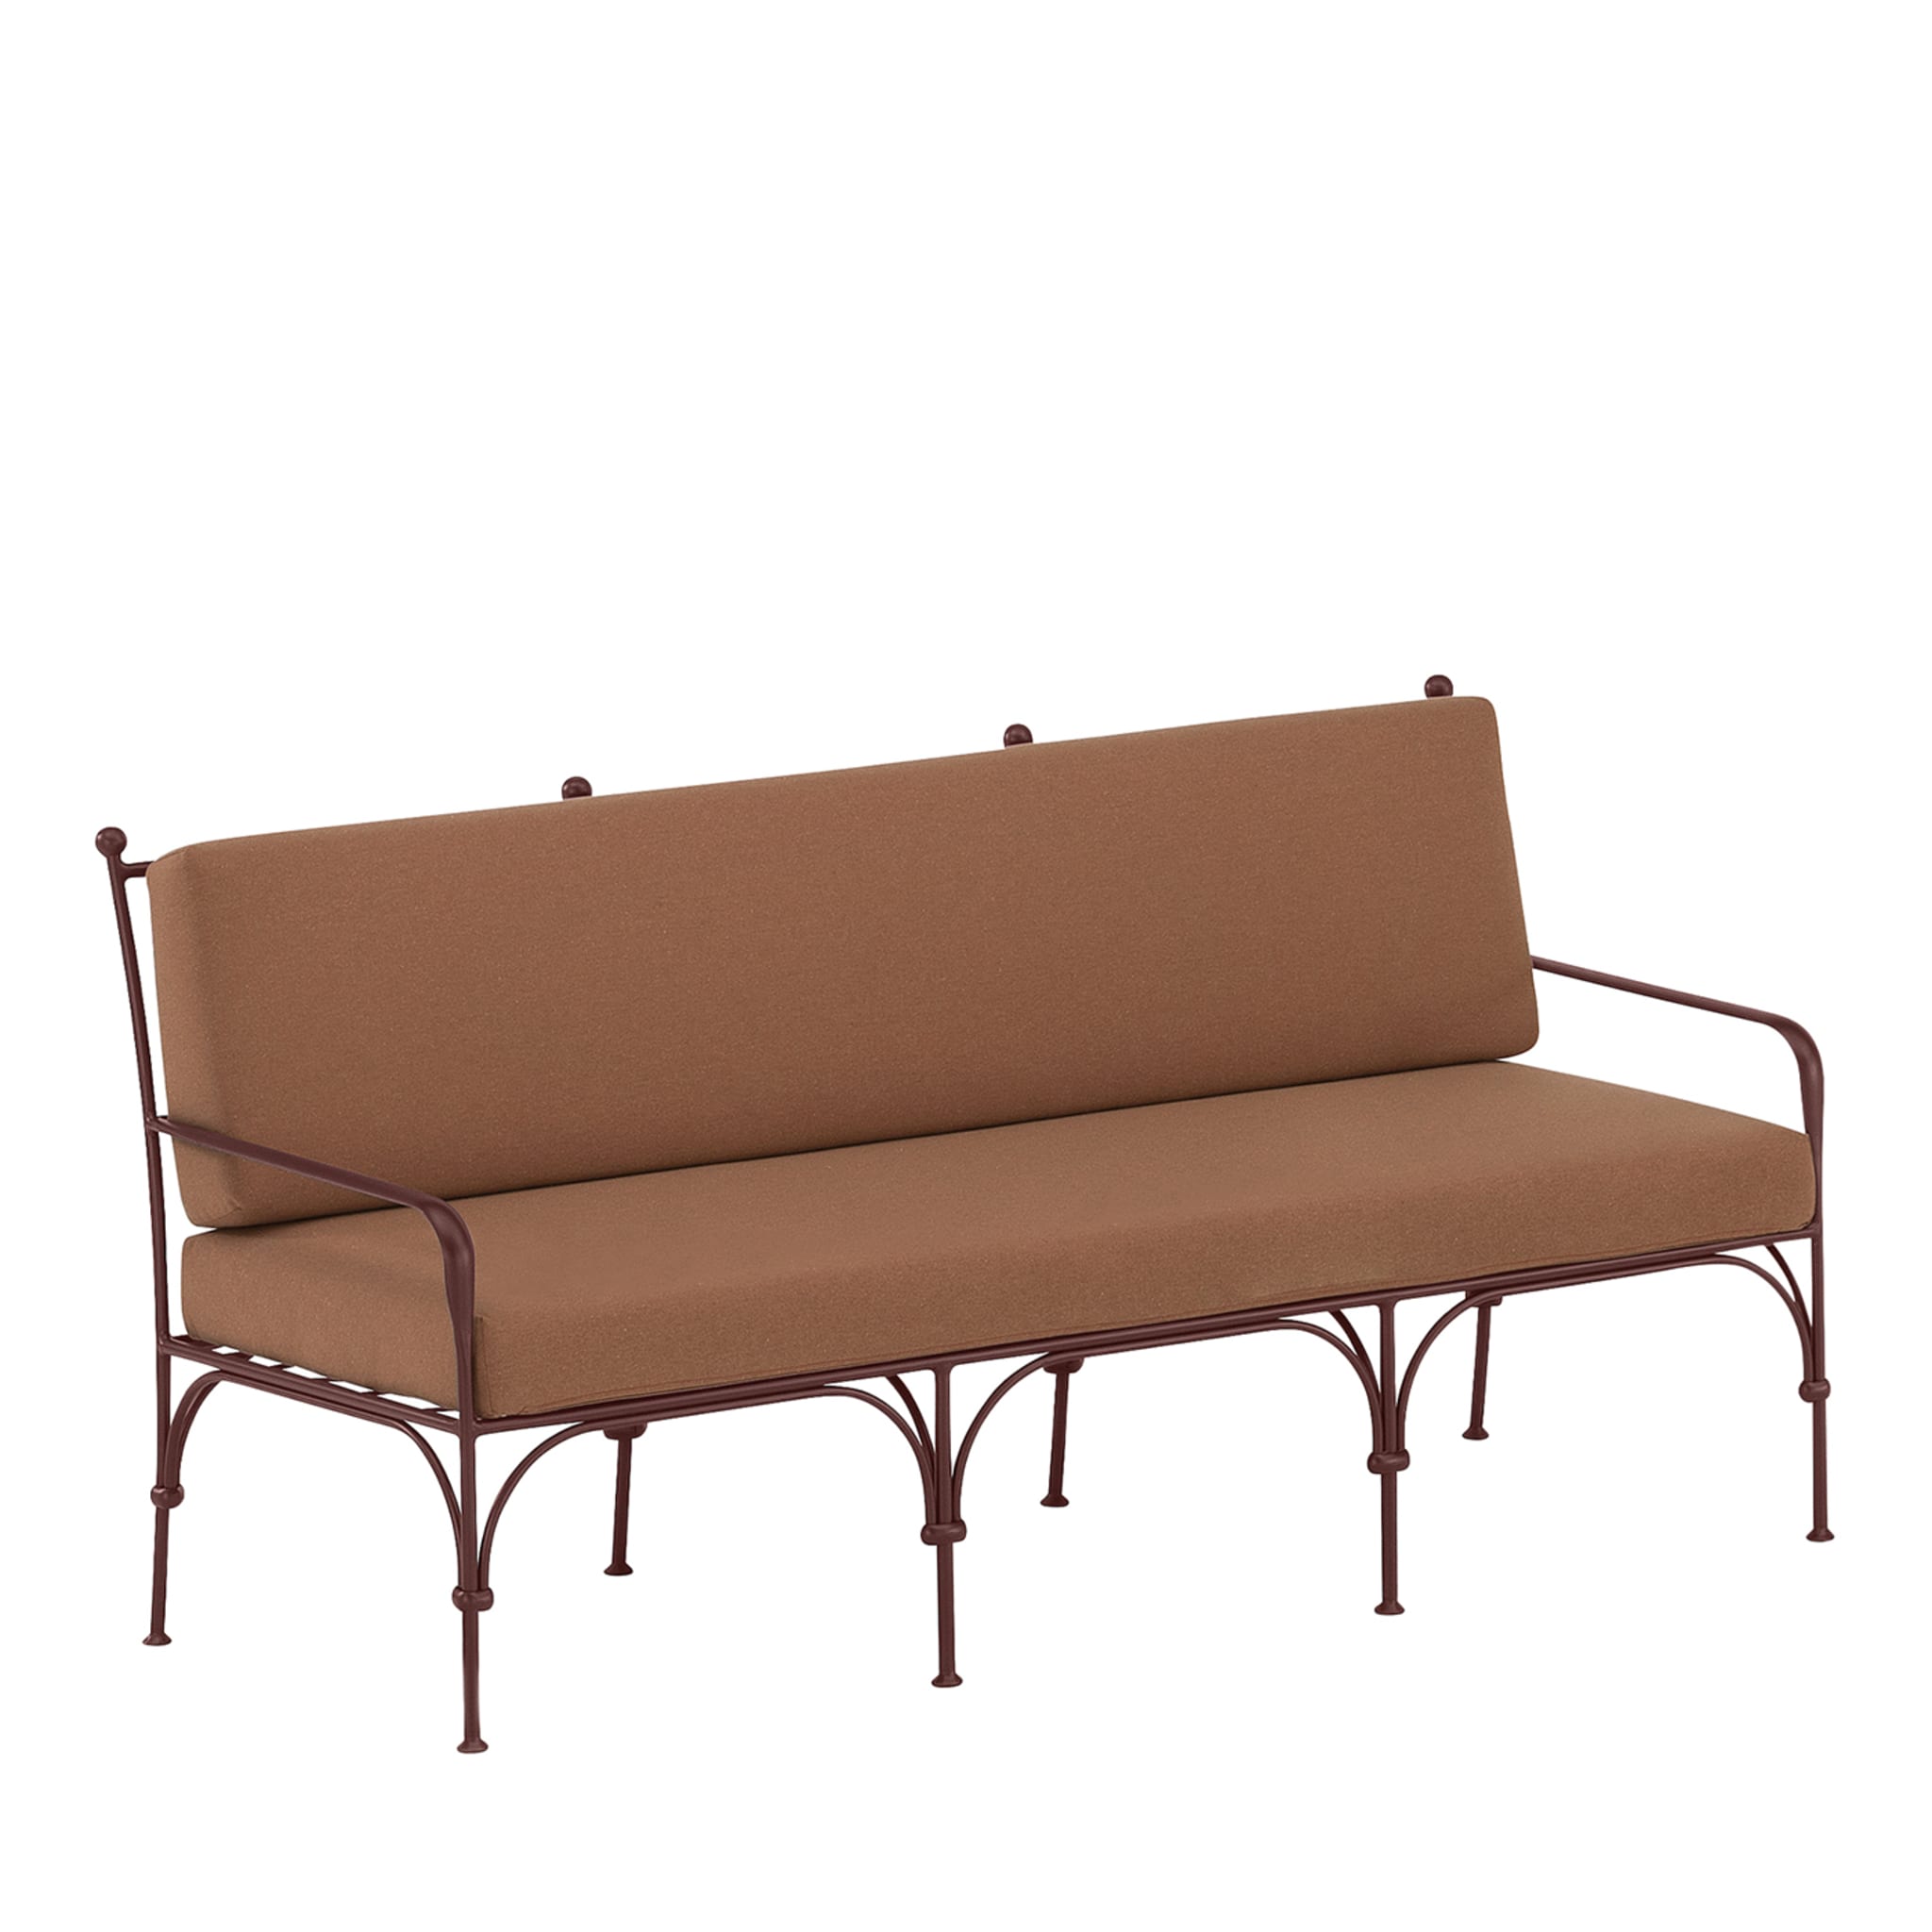 Nottambula 3-Seater Wrought Iron Brown Sofa - Main view